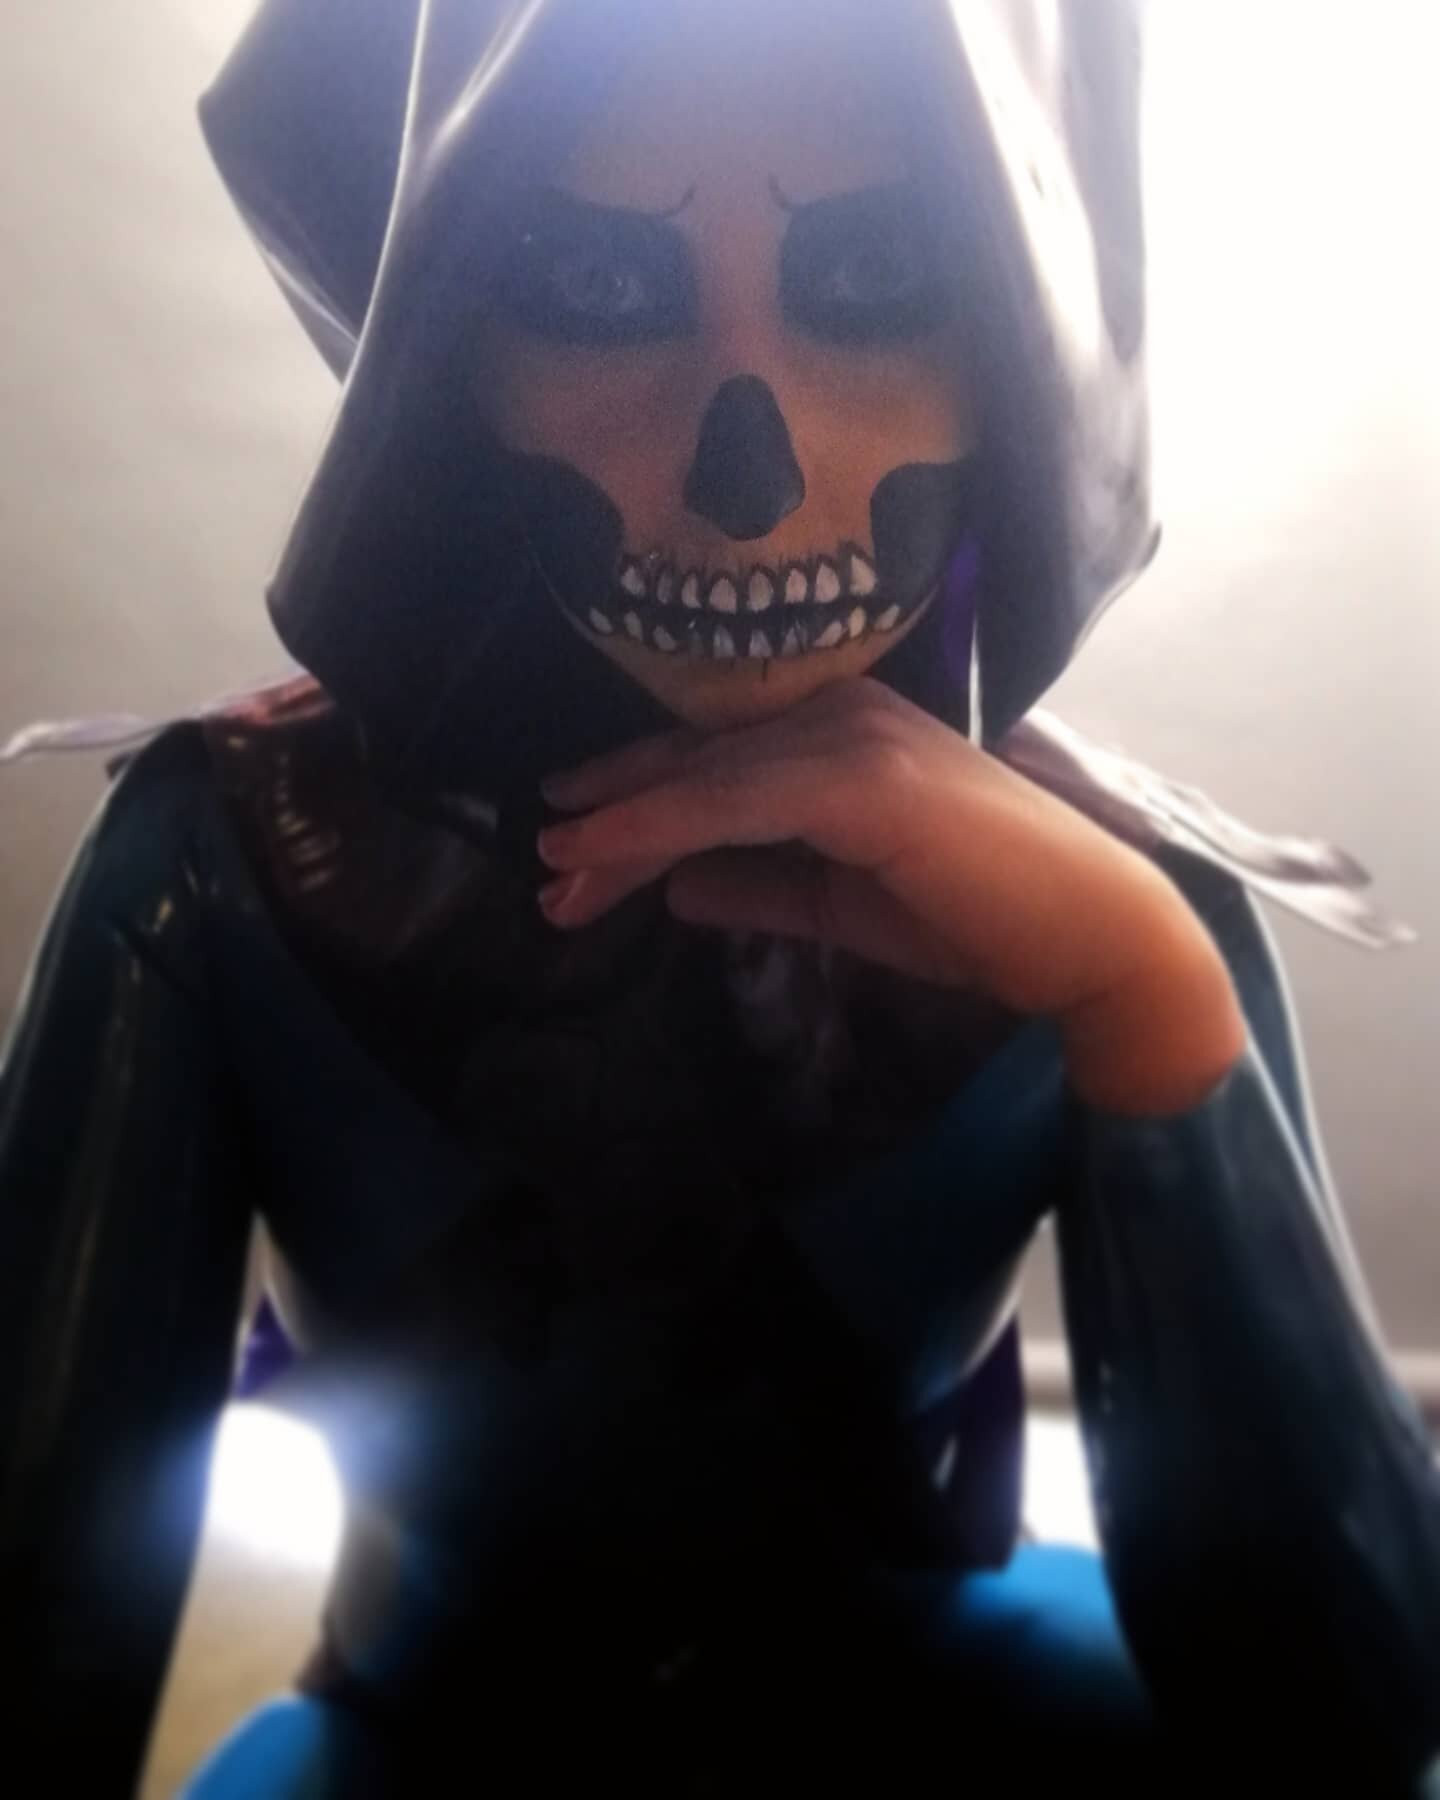 &quot;Nevermind what I said, just do what I said&quot;
.
#skeletor #latexcosplay #latexdesigner #halloweeneveryday
.
Latex @deetzbyvisha 
Makeup/model @vishaloo